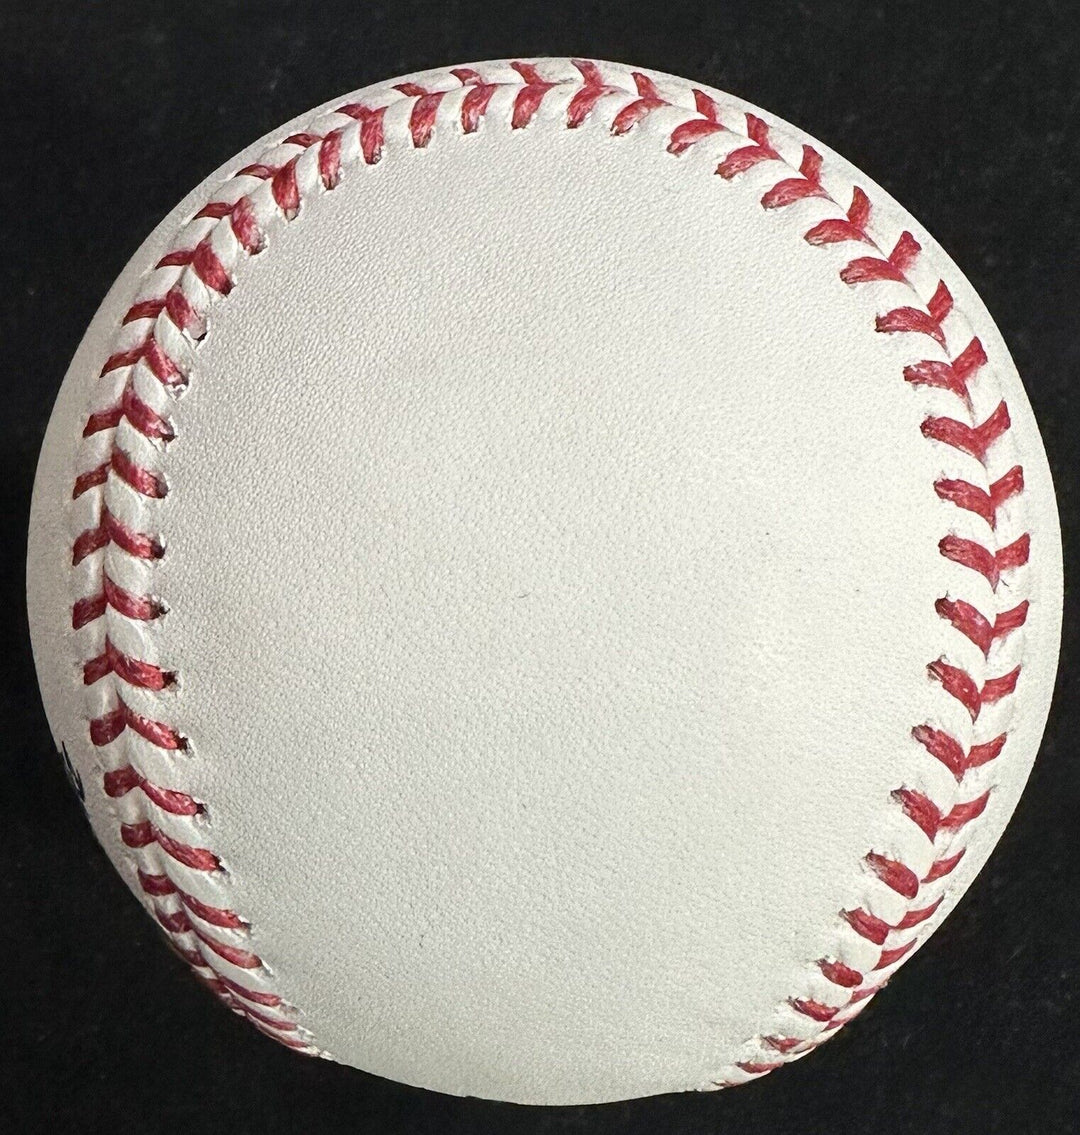 Jeremy Pena Astros Signed 2022 World Series Baseball Rookie Ws Mvp Auto MLB COA Image 7